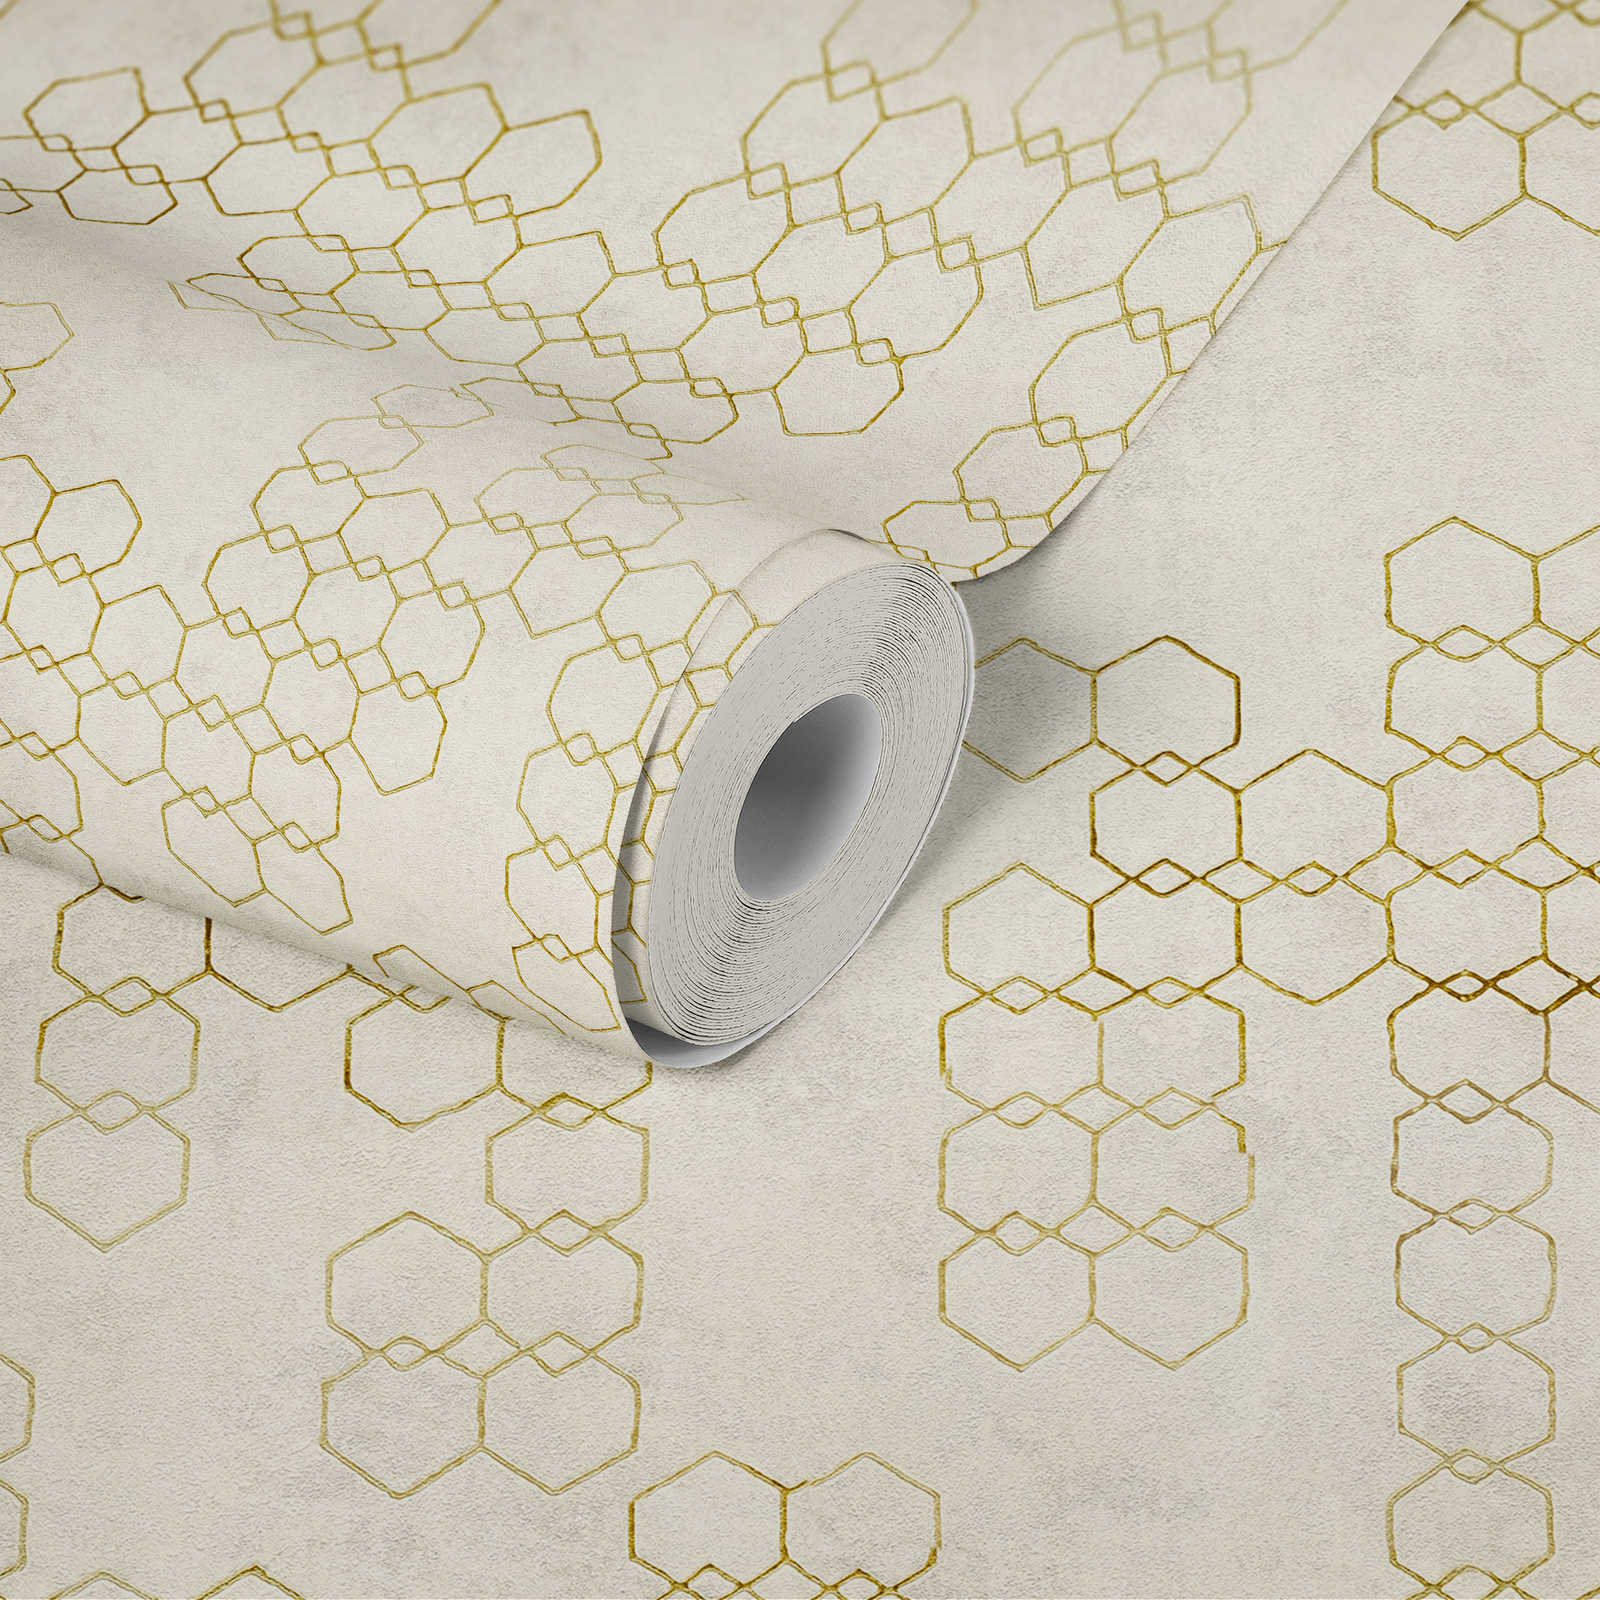             Geometrische Mustertapete im Industrial Style – Creme, Gold, Grau
        